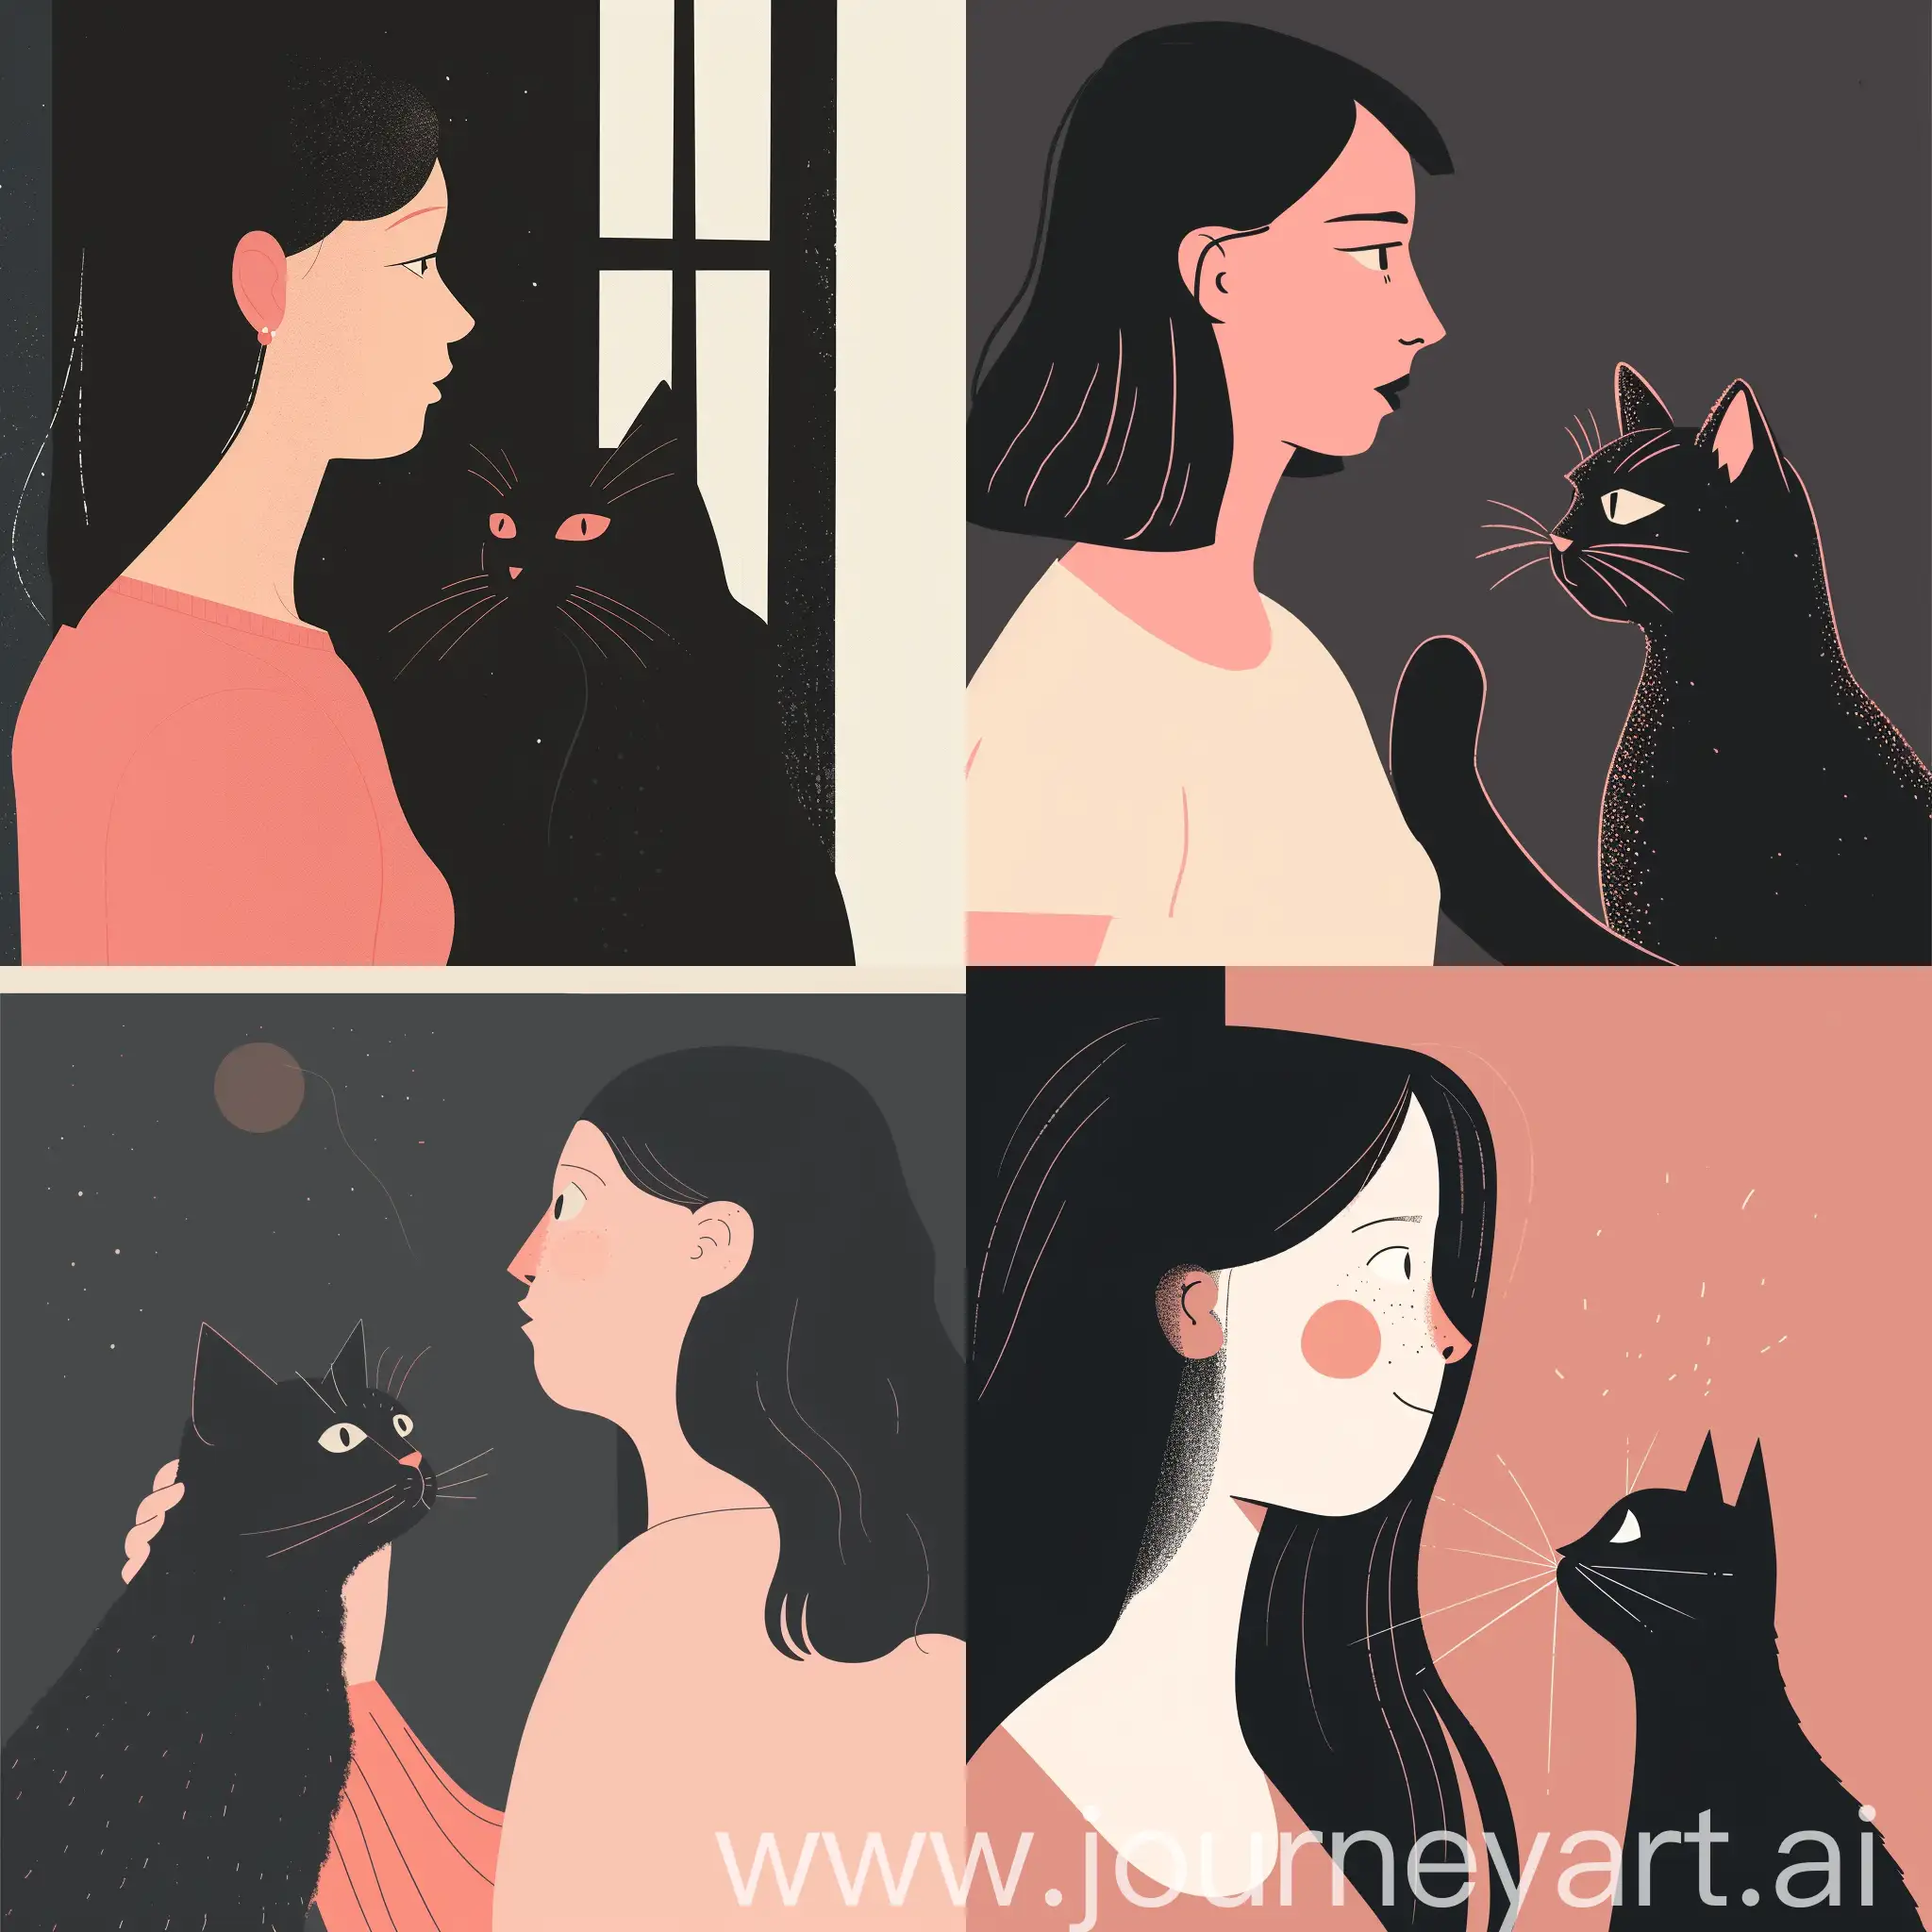 Woman-Admiring-Black-Cat-Dark-White-and-Pink-Flat-Illustration